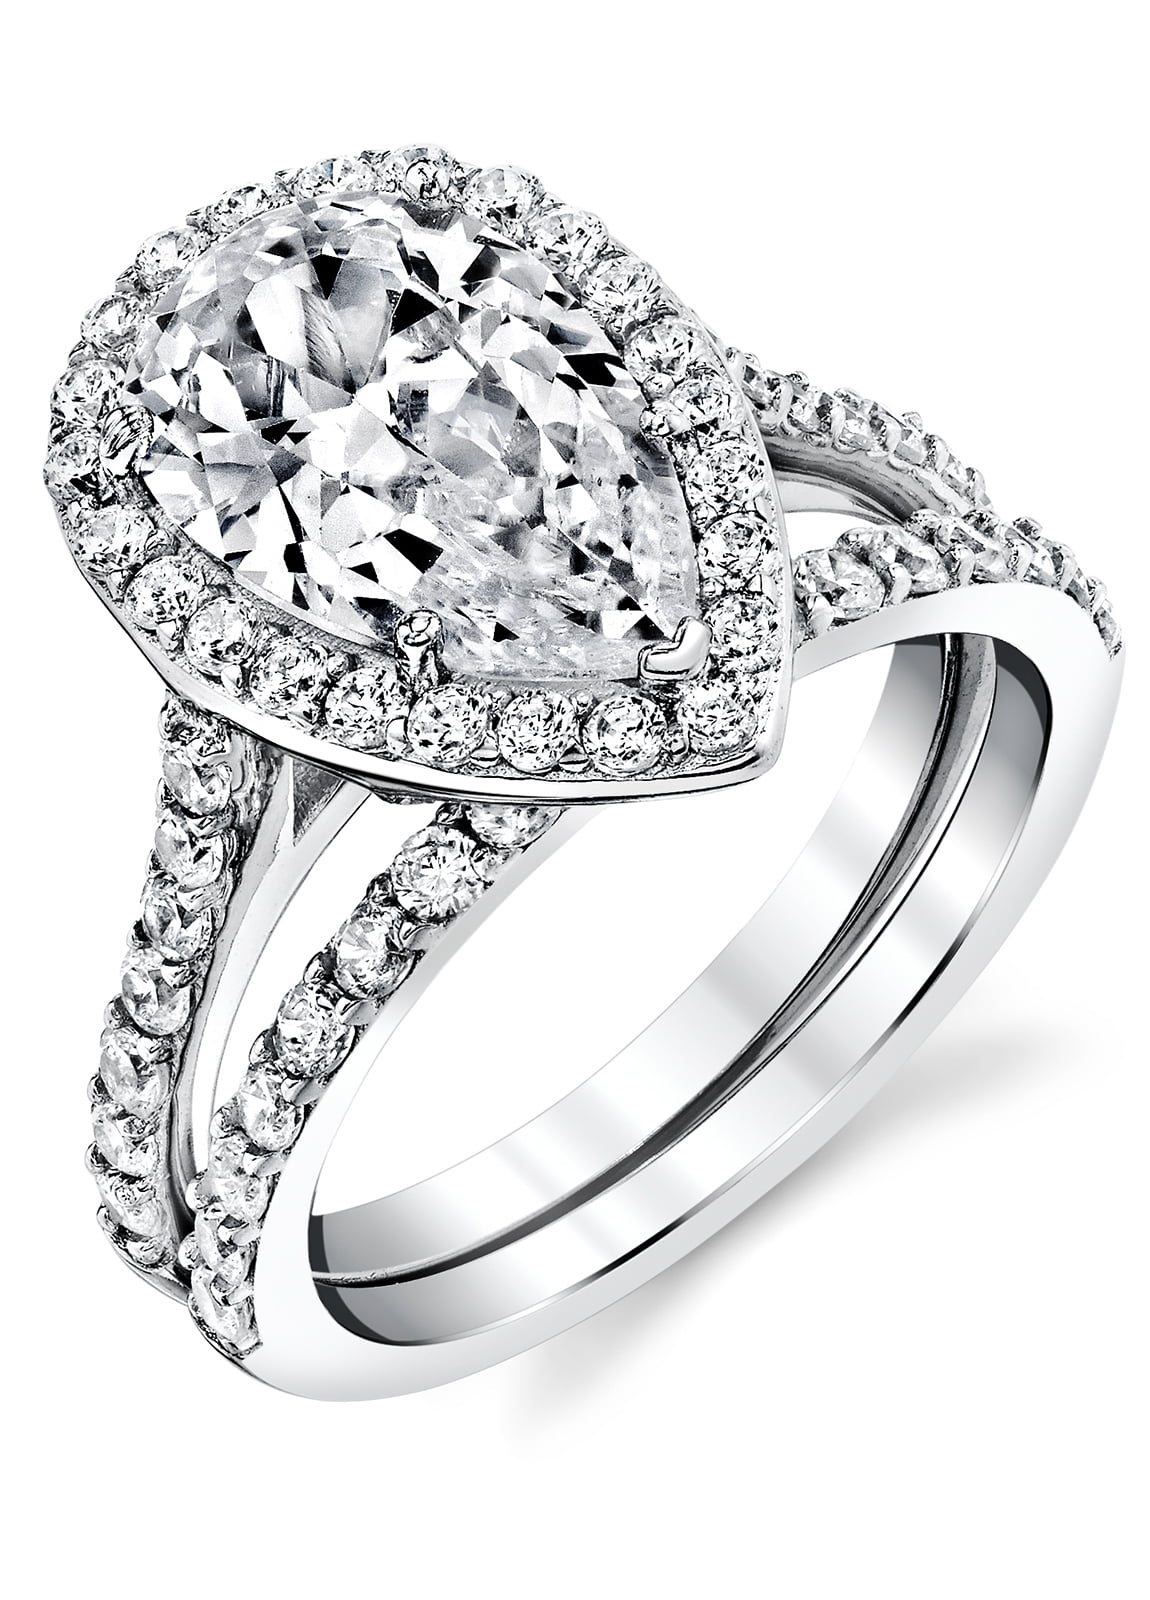 Women S Sterling Silver 925 Bridal Set Engagement Rings 3 Carat Pear Tear Shape Cubic Zirconia 5